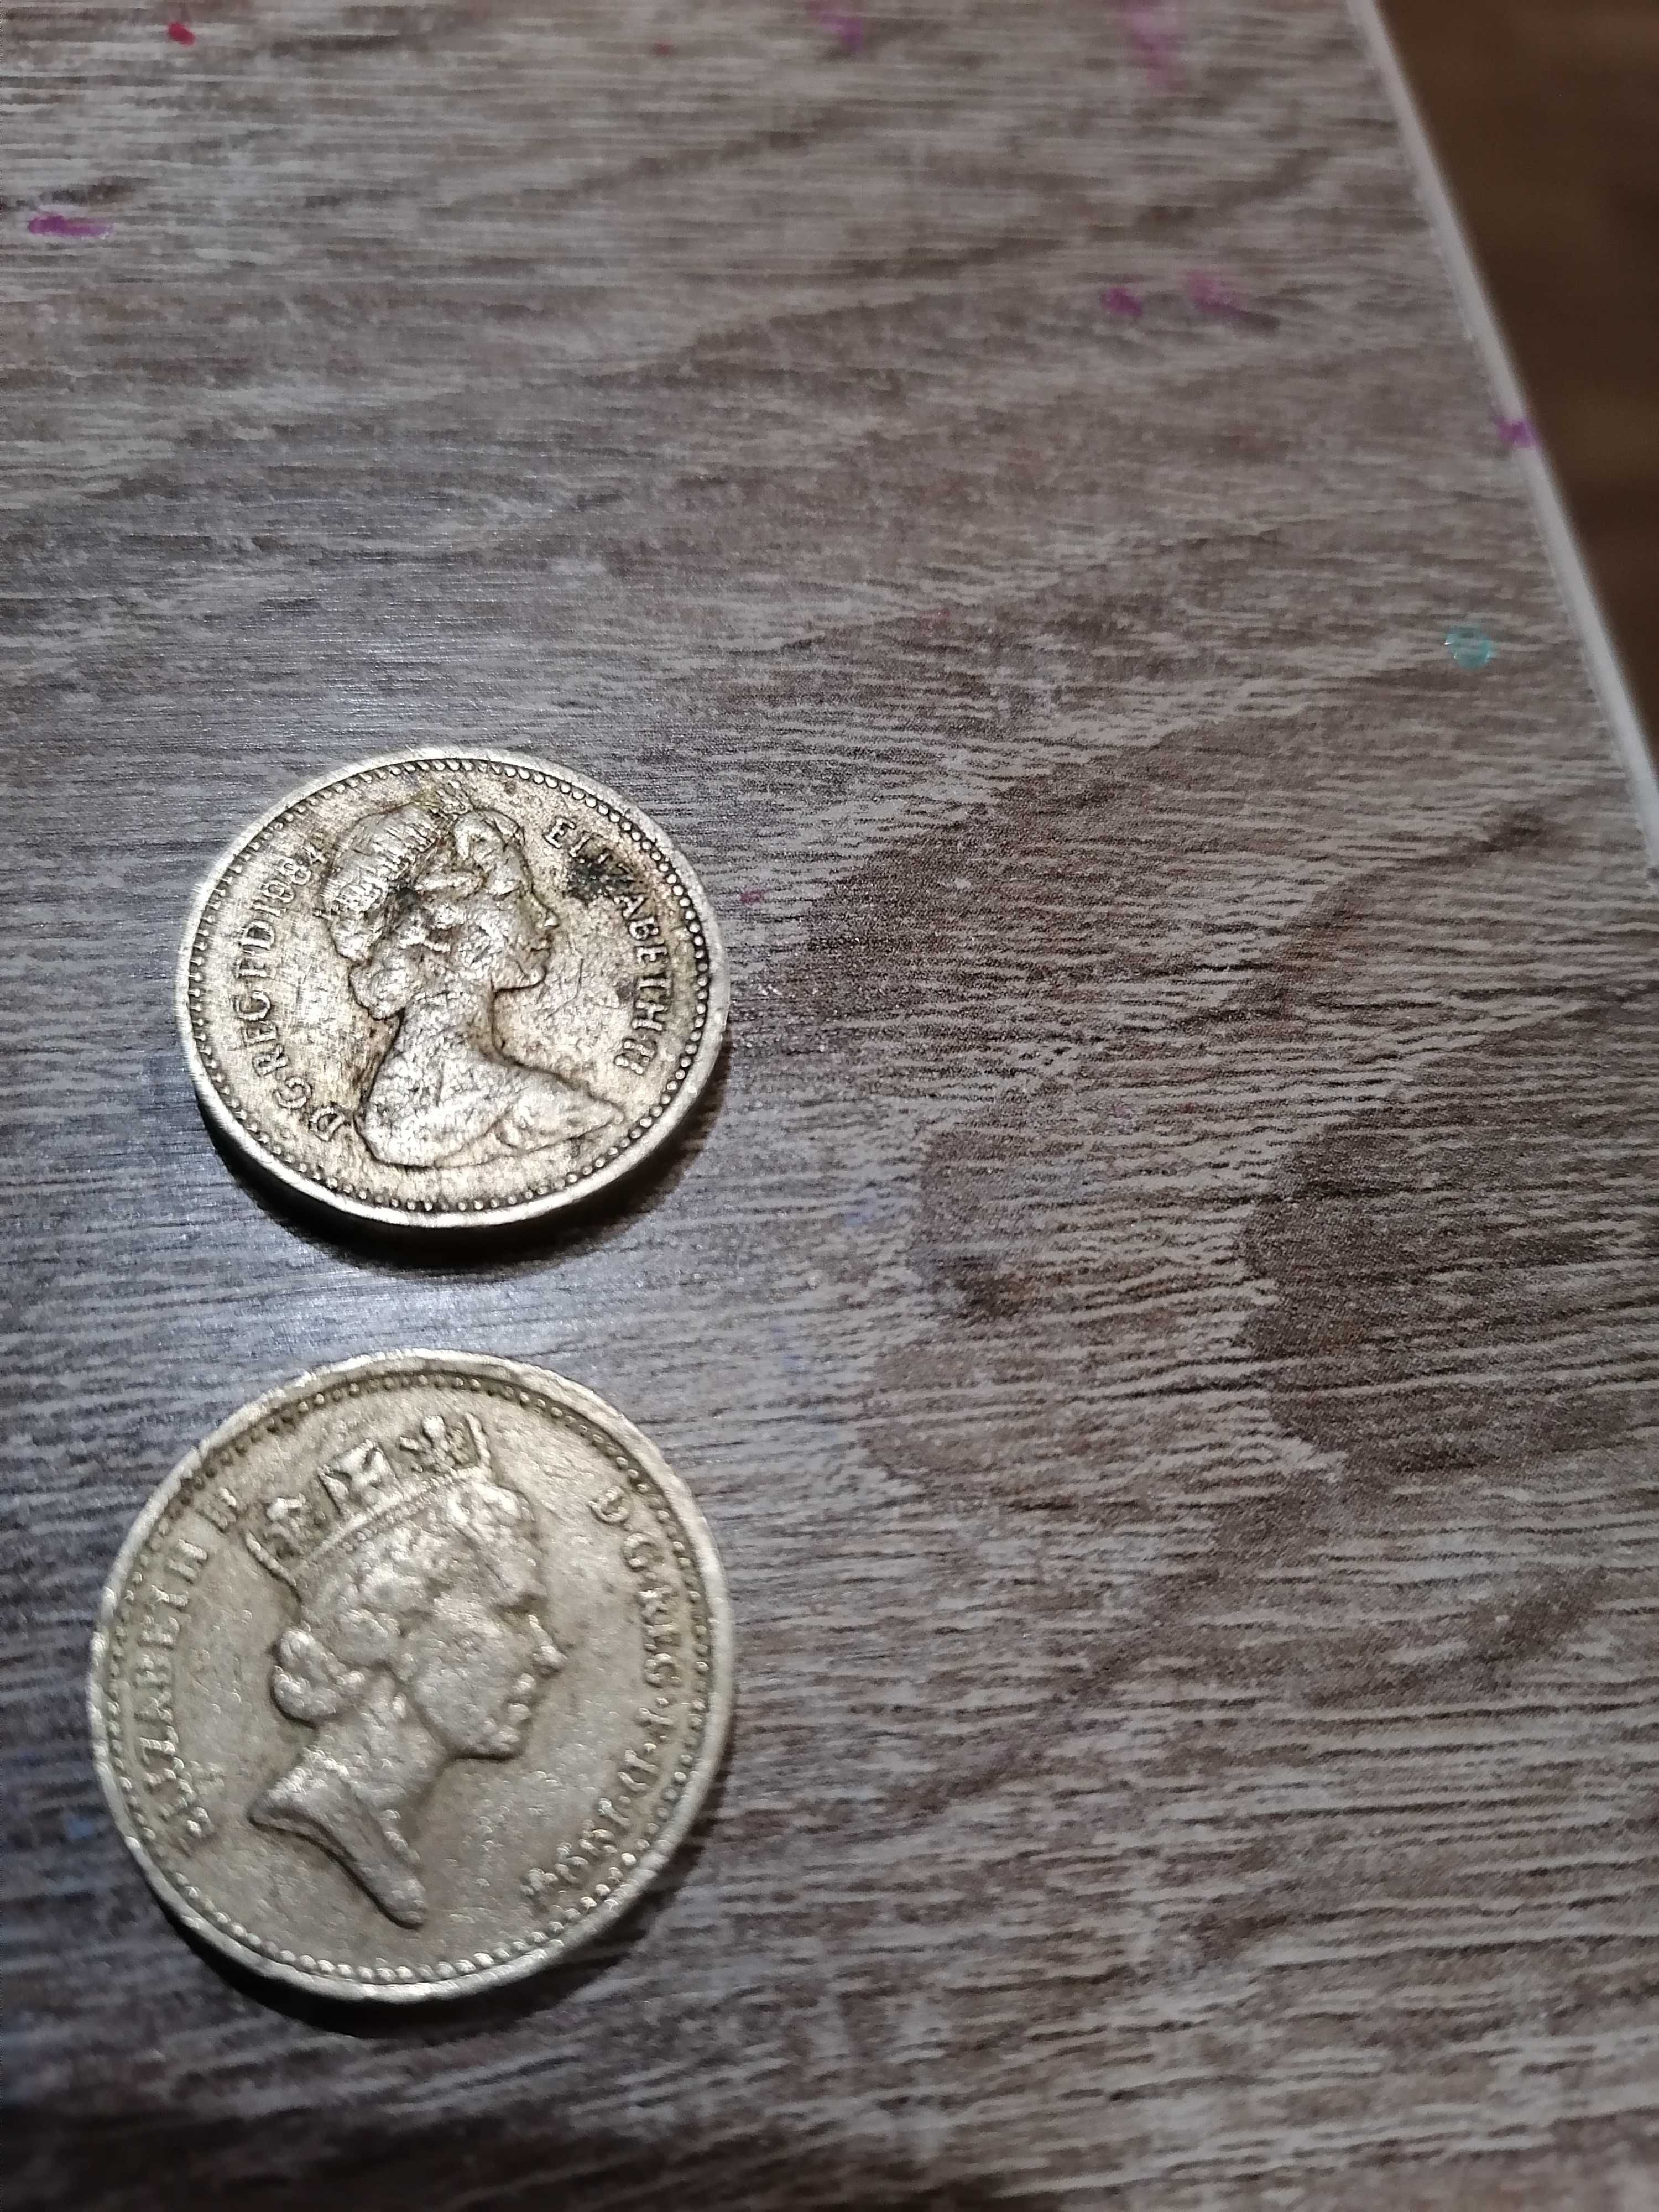 Monety One Pound z 1984r i 1994r Destrukt odwrócone napisy